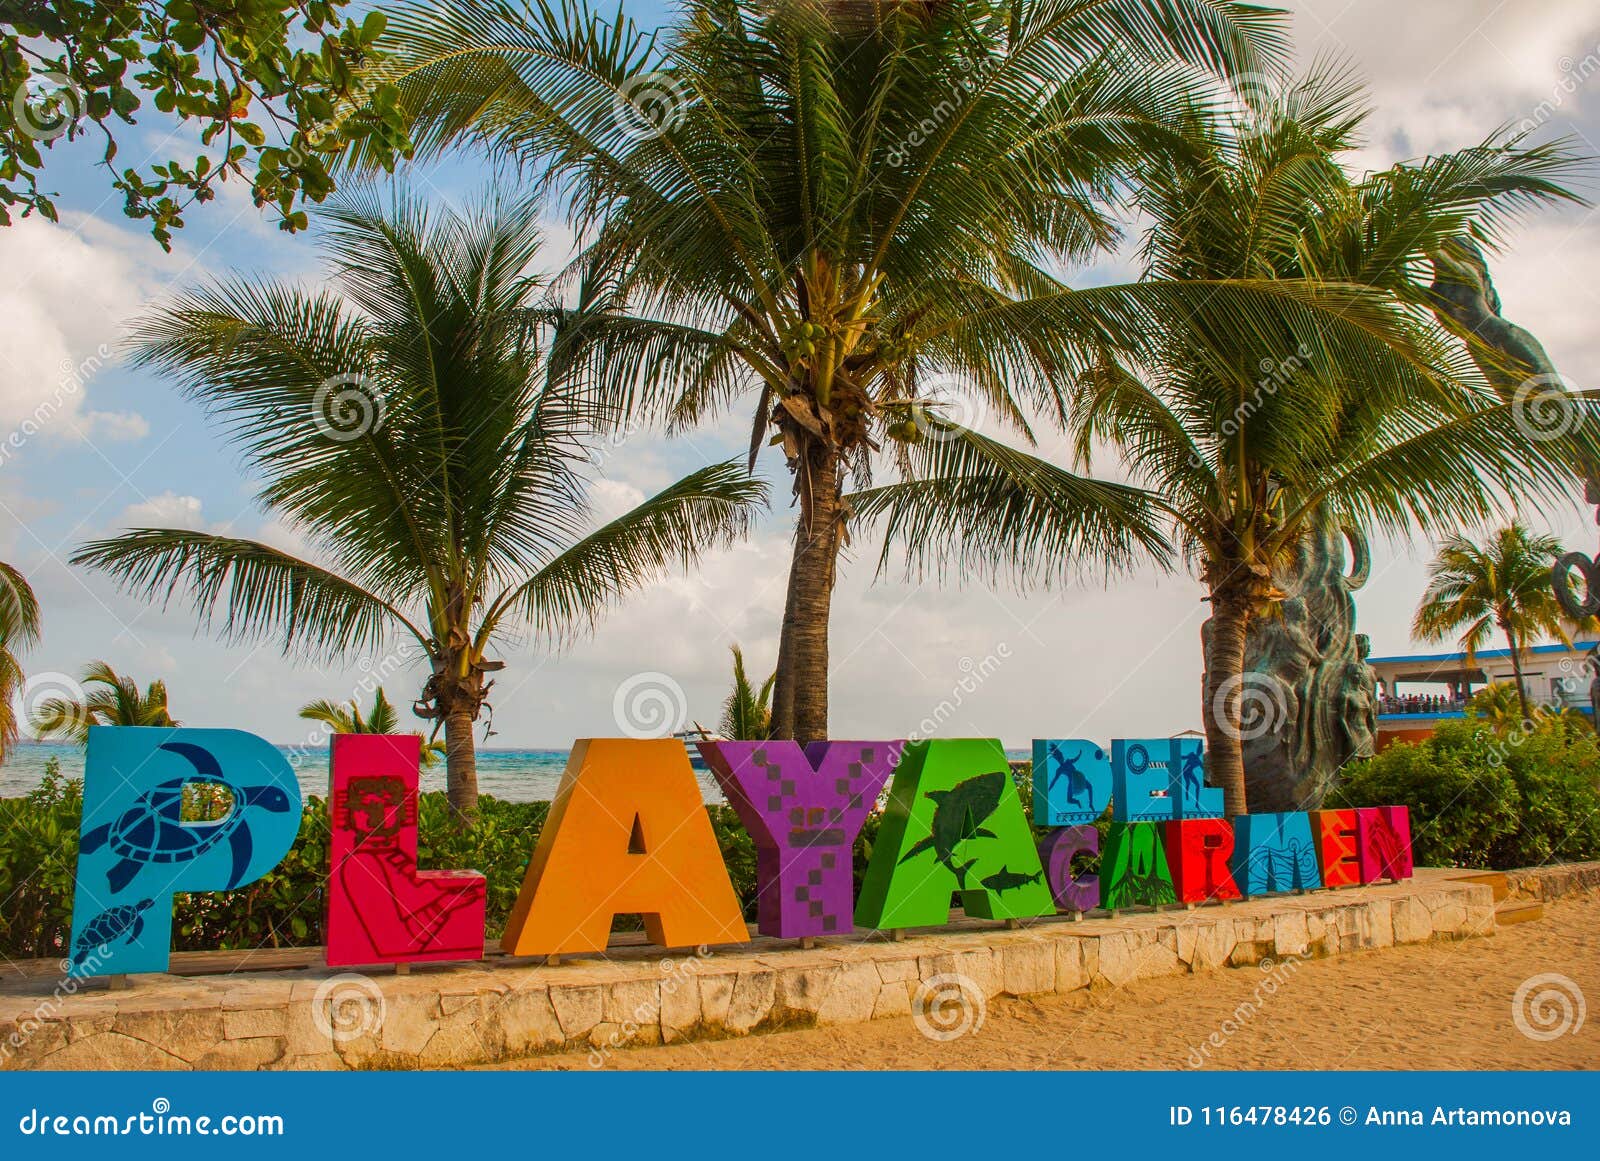 playa del carmen, mexico: open view of the huge words of playa by the beach in playa del carmen, riviera maya, mexico